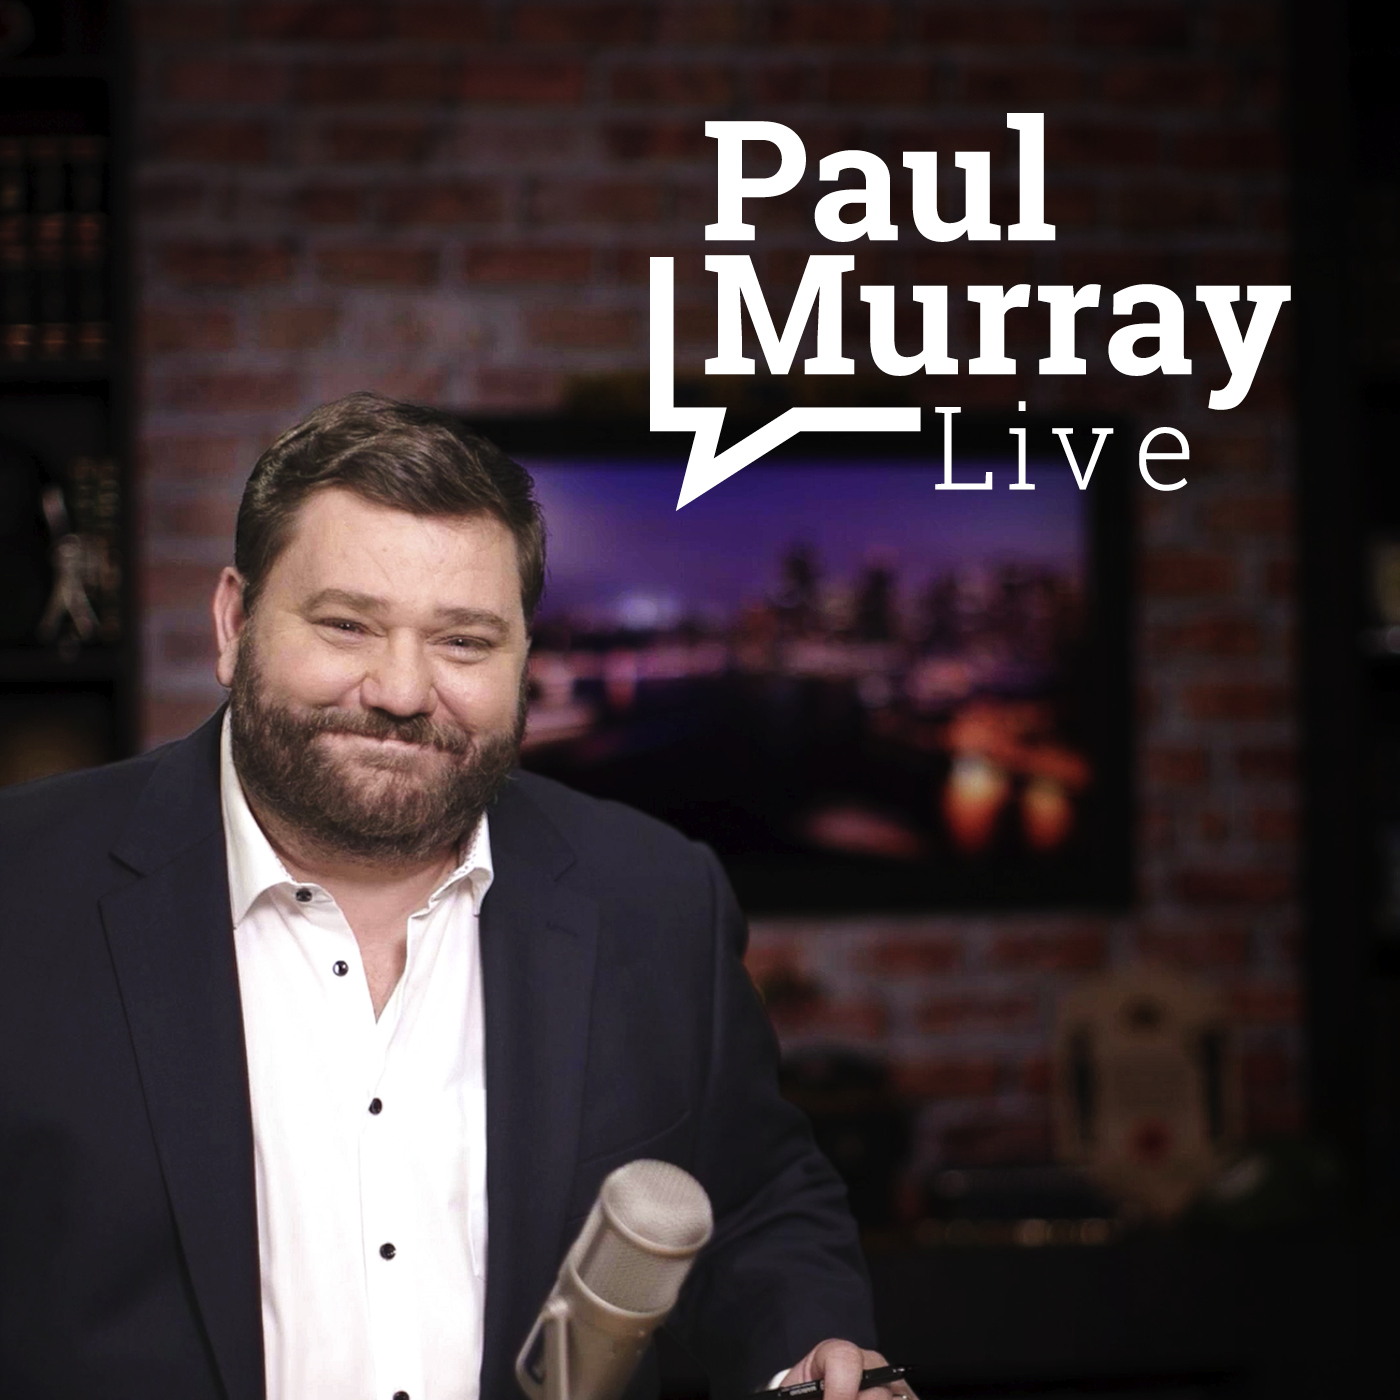 Paul Murray Live, Thursday 23 March